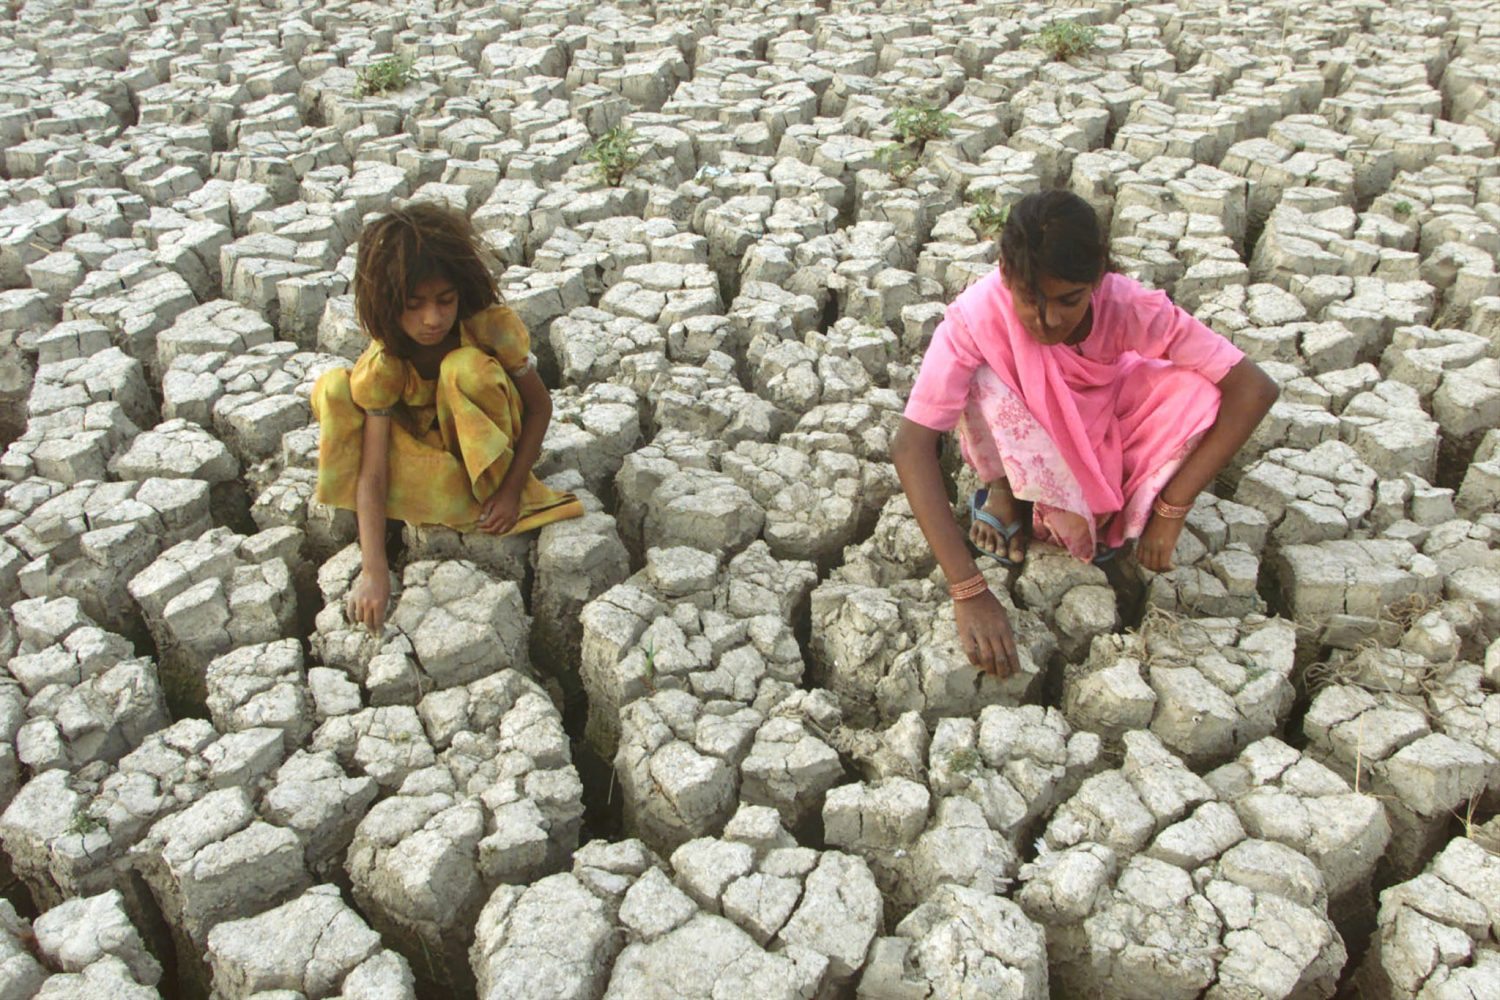 India water crisis hits rural women hardest